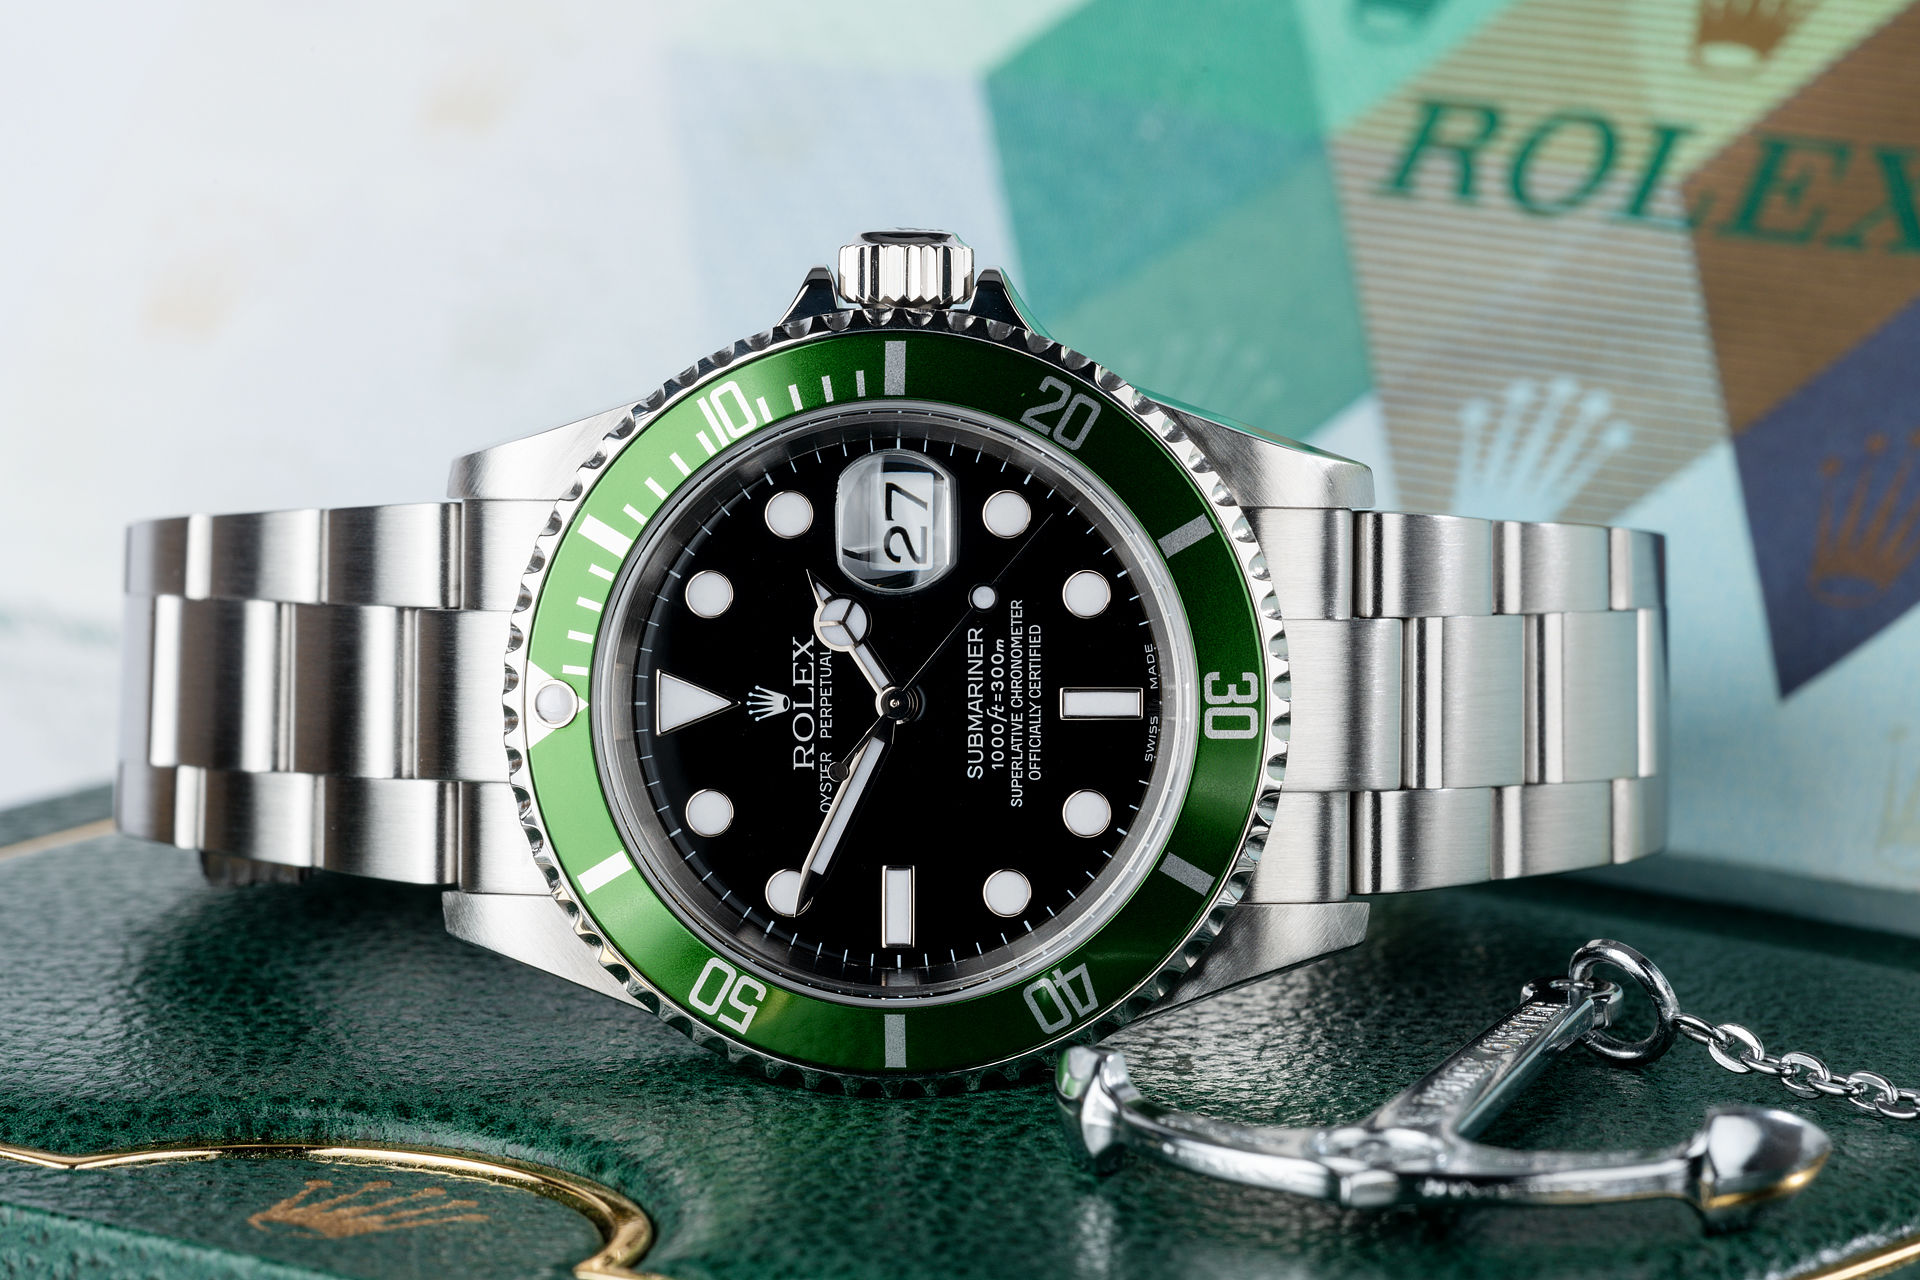 Rolex Submariner 16610LV “KERMIT” Full SET – The Watch Collector